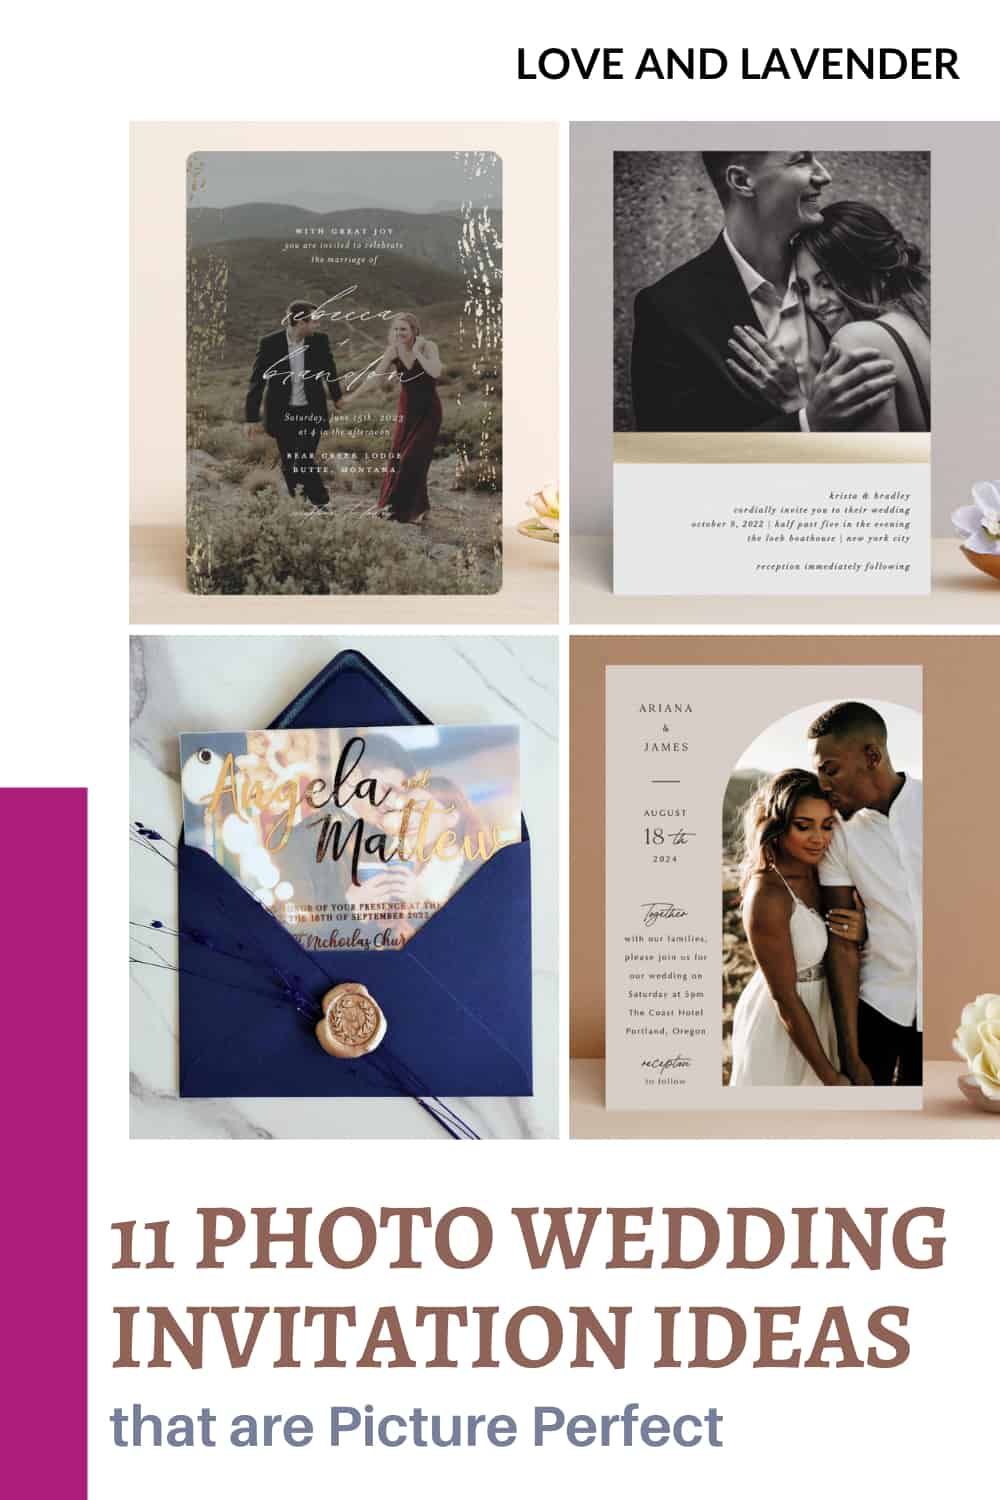 11 Photo Wedding Invitation Ideas - Pinterest pin